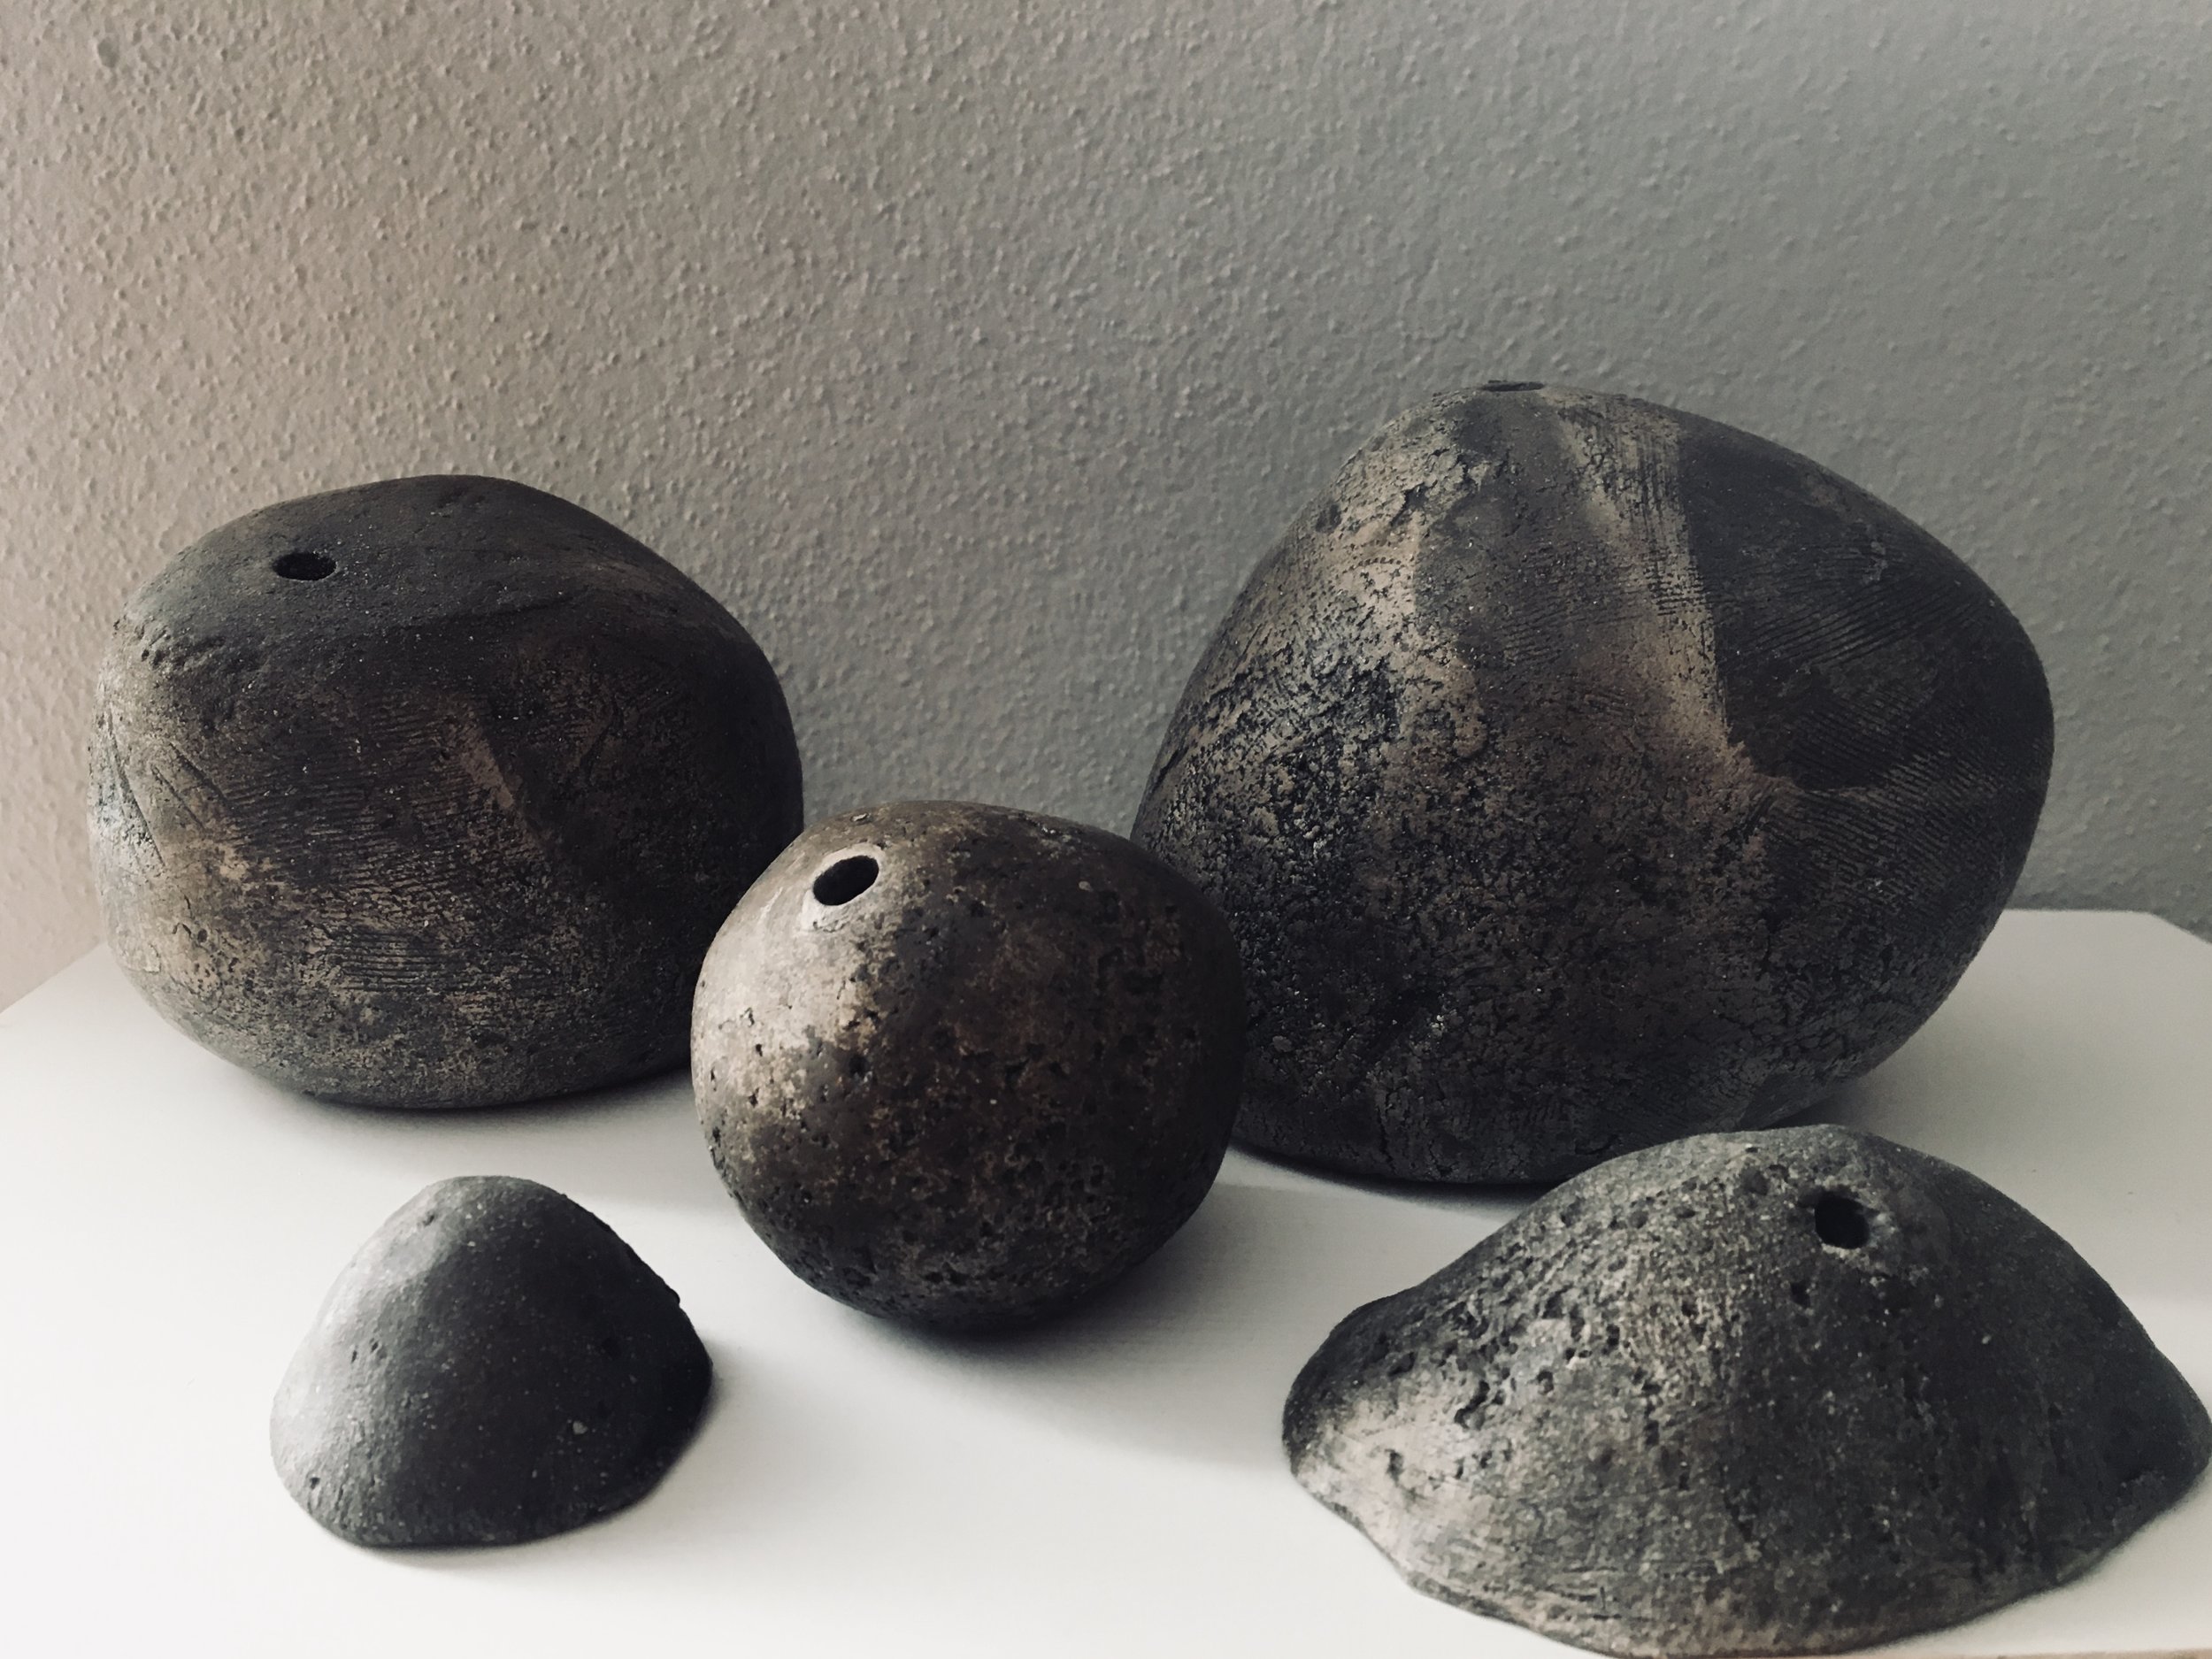 Maria Jole Serreli, "As stones", 2020